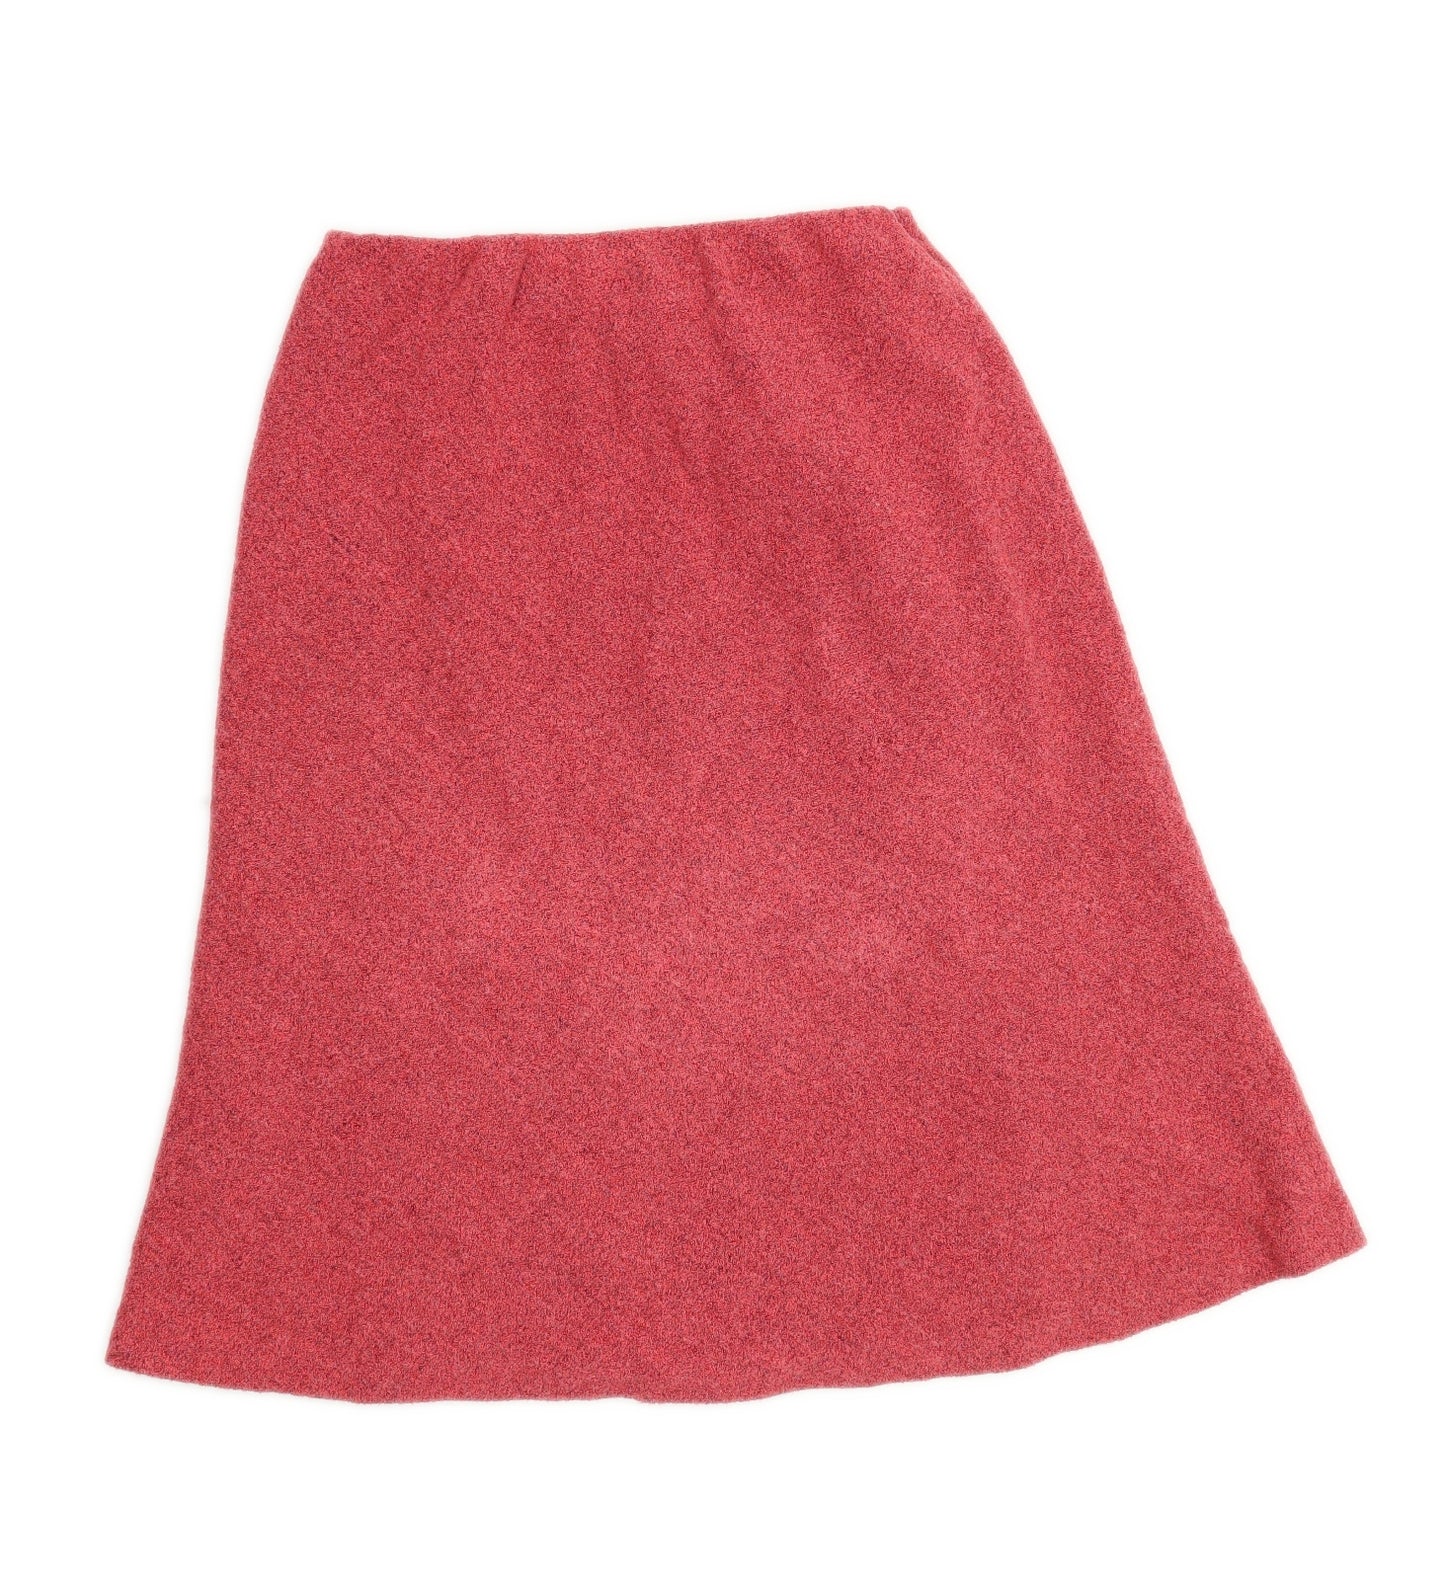 Eastex Womens Size 12 Red Skirt (Regular)